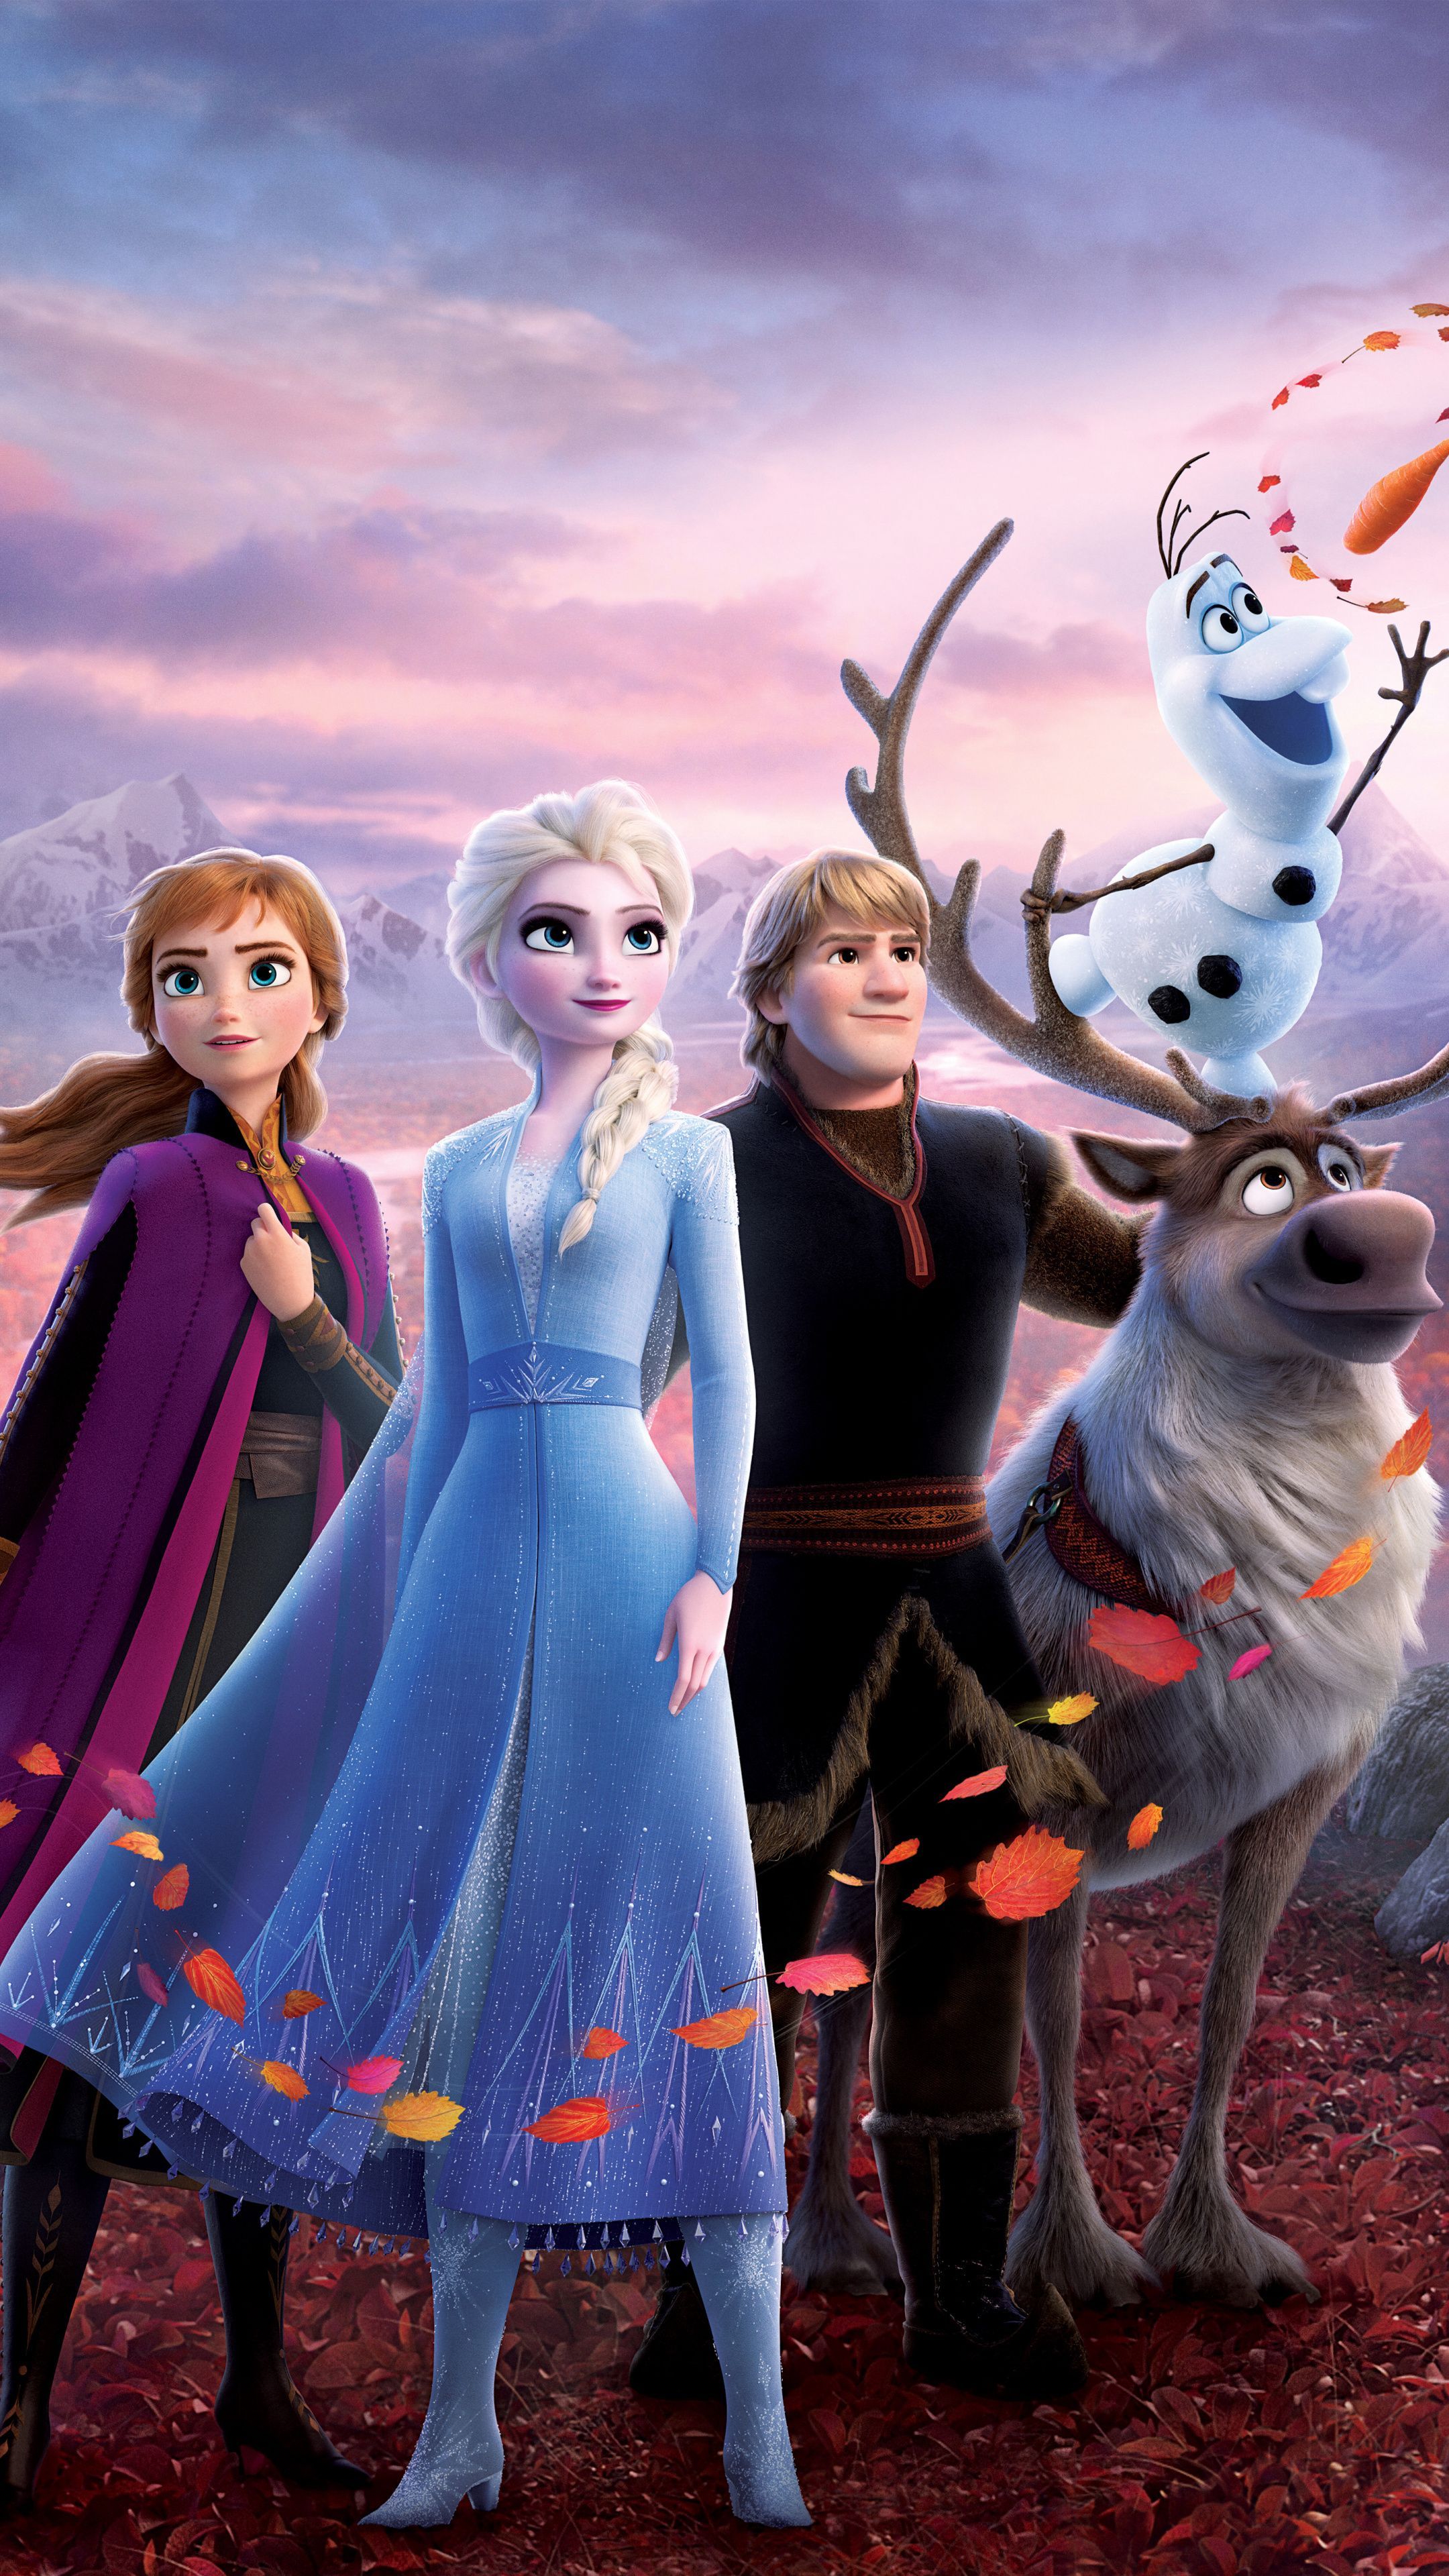 Download 2160x3840 Wallpaper Movie, Disney's Animation Movie, Frozen Sisters, 4к, Sony Xperia. Frozen disney movie, Disney princess frozen, Frozen 2 wallpaper